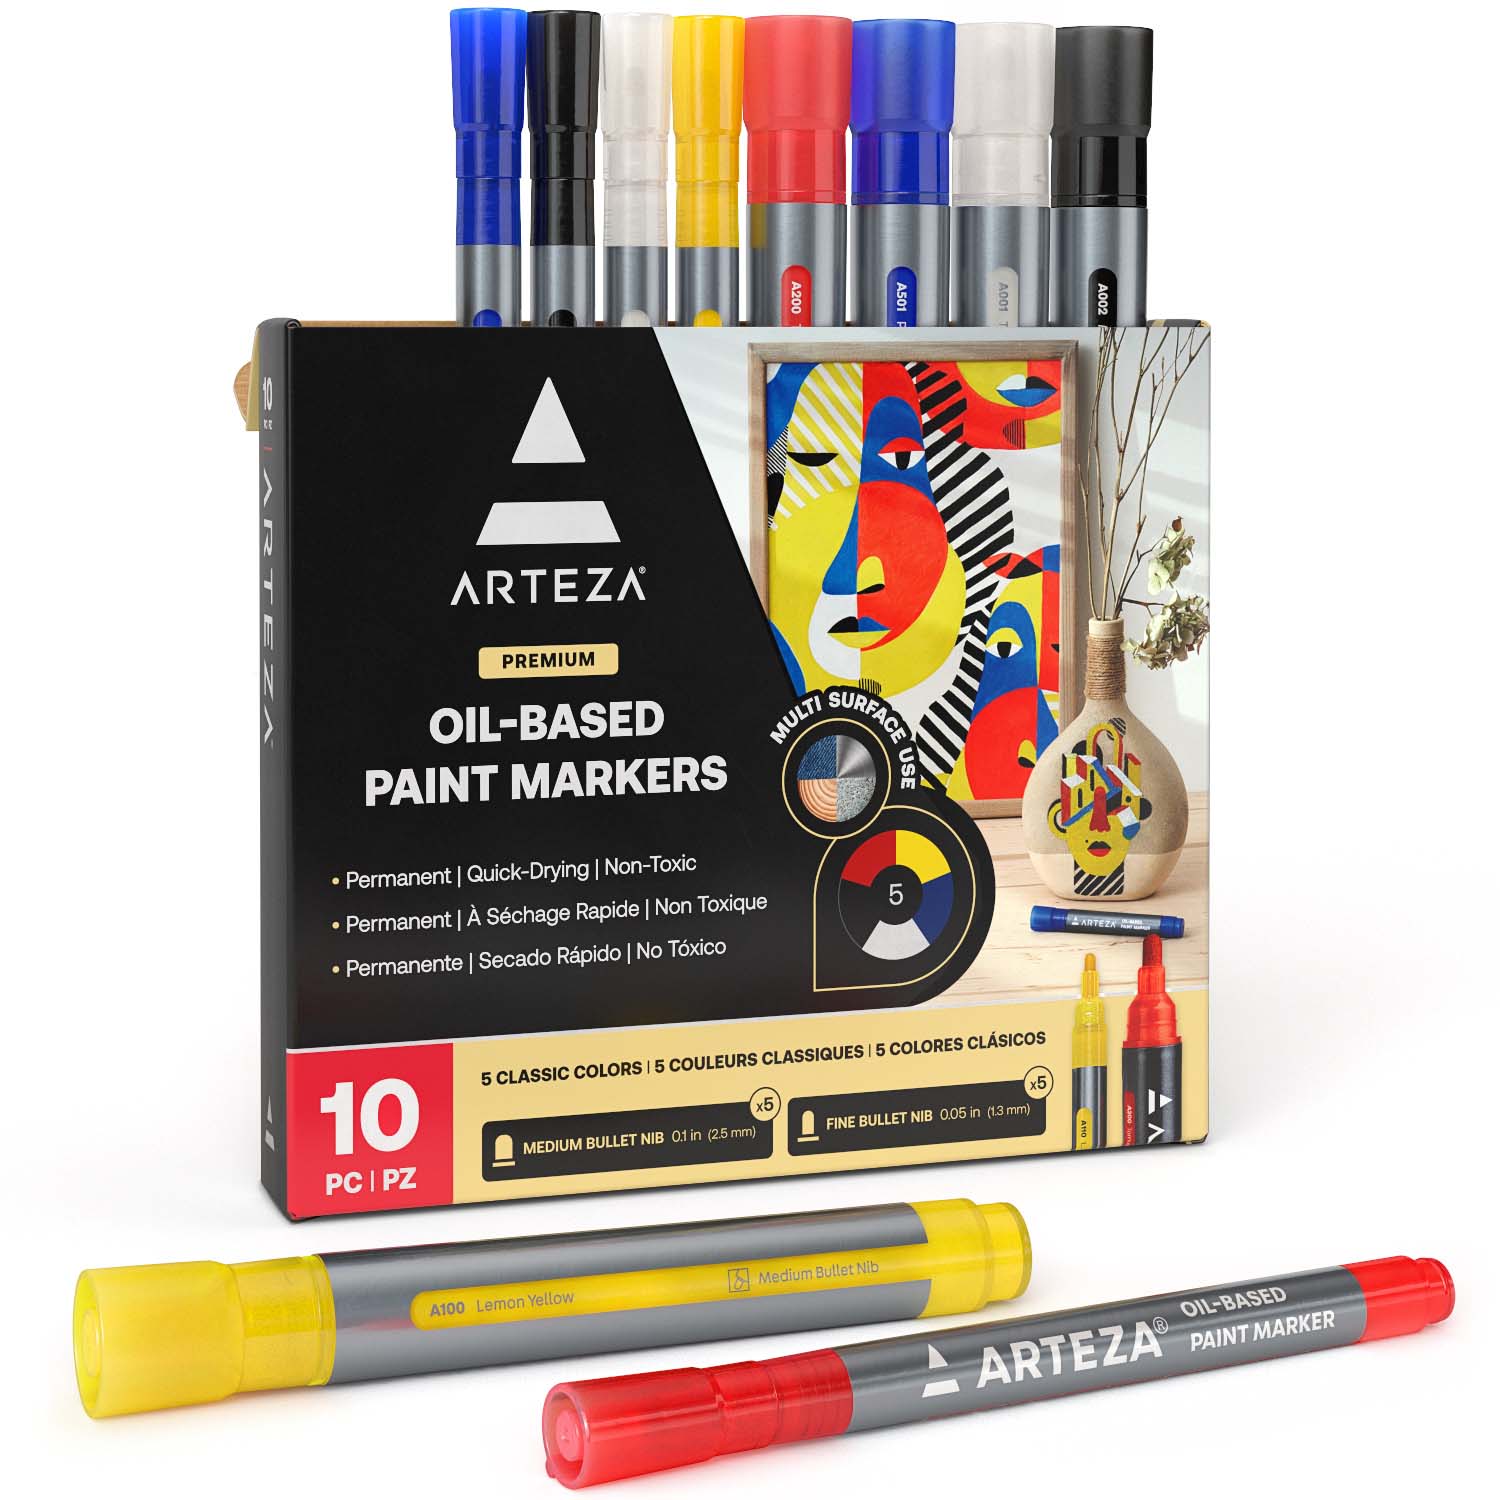 Bullet Pens & Pencils - Pens by Lisa